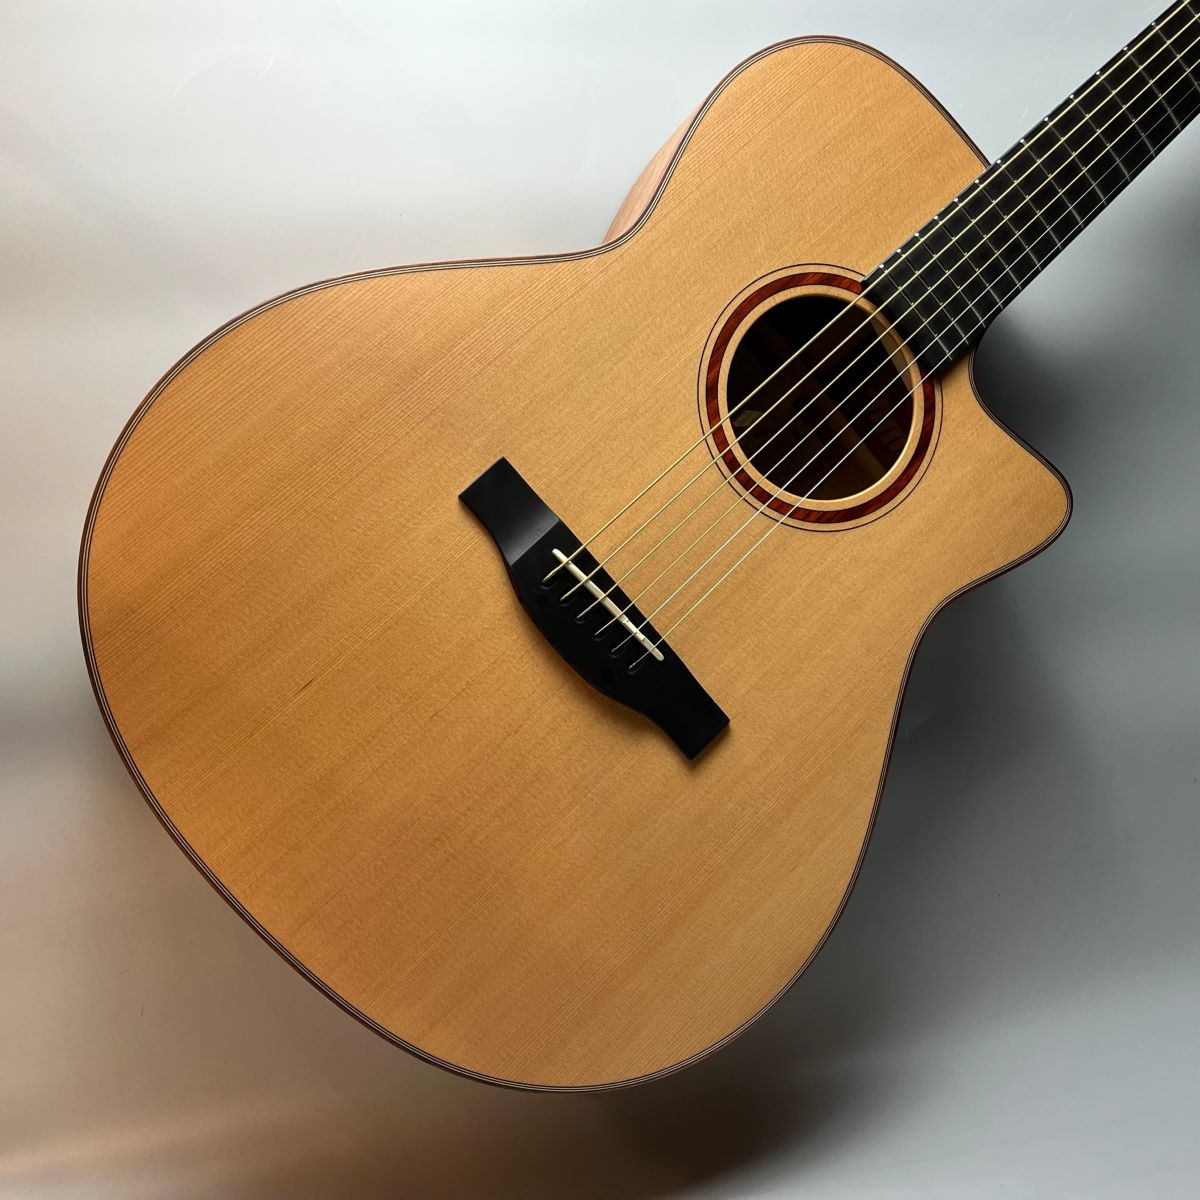 MORRIS S92 V アコースティックギター【フォークギター】 モーリス